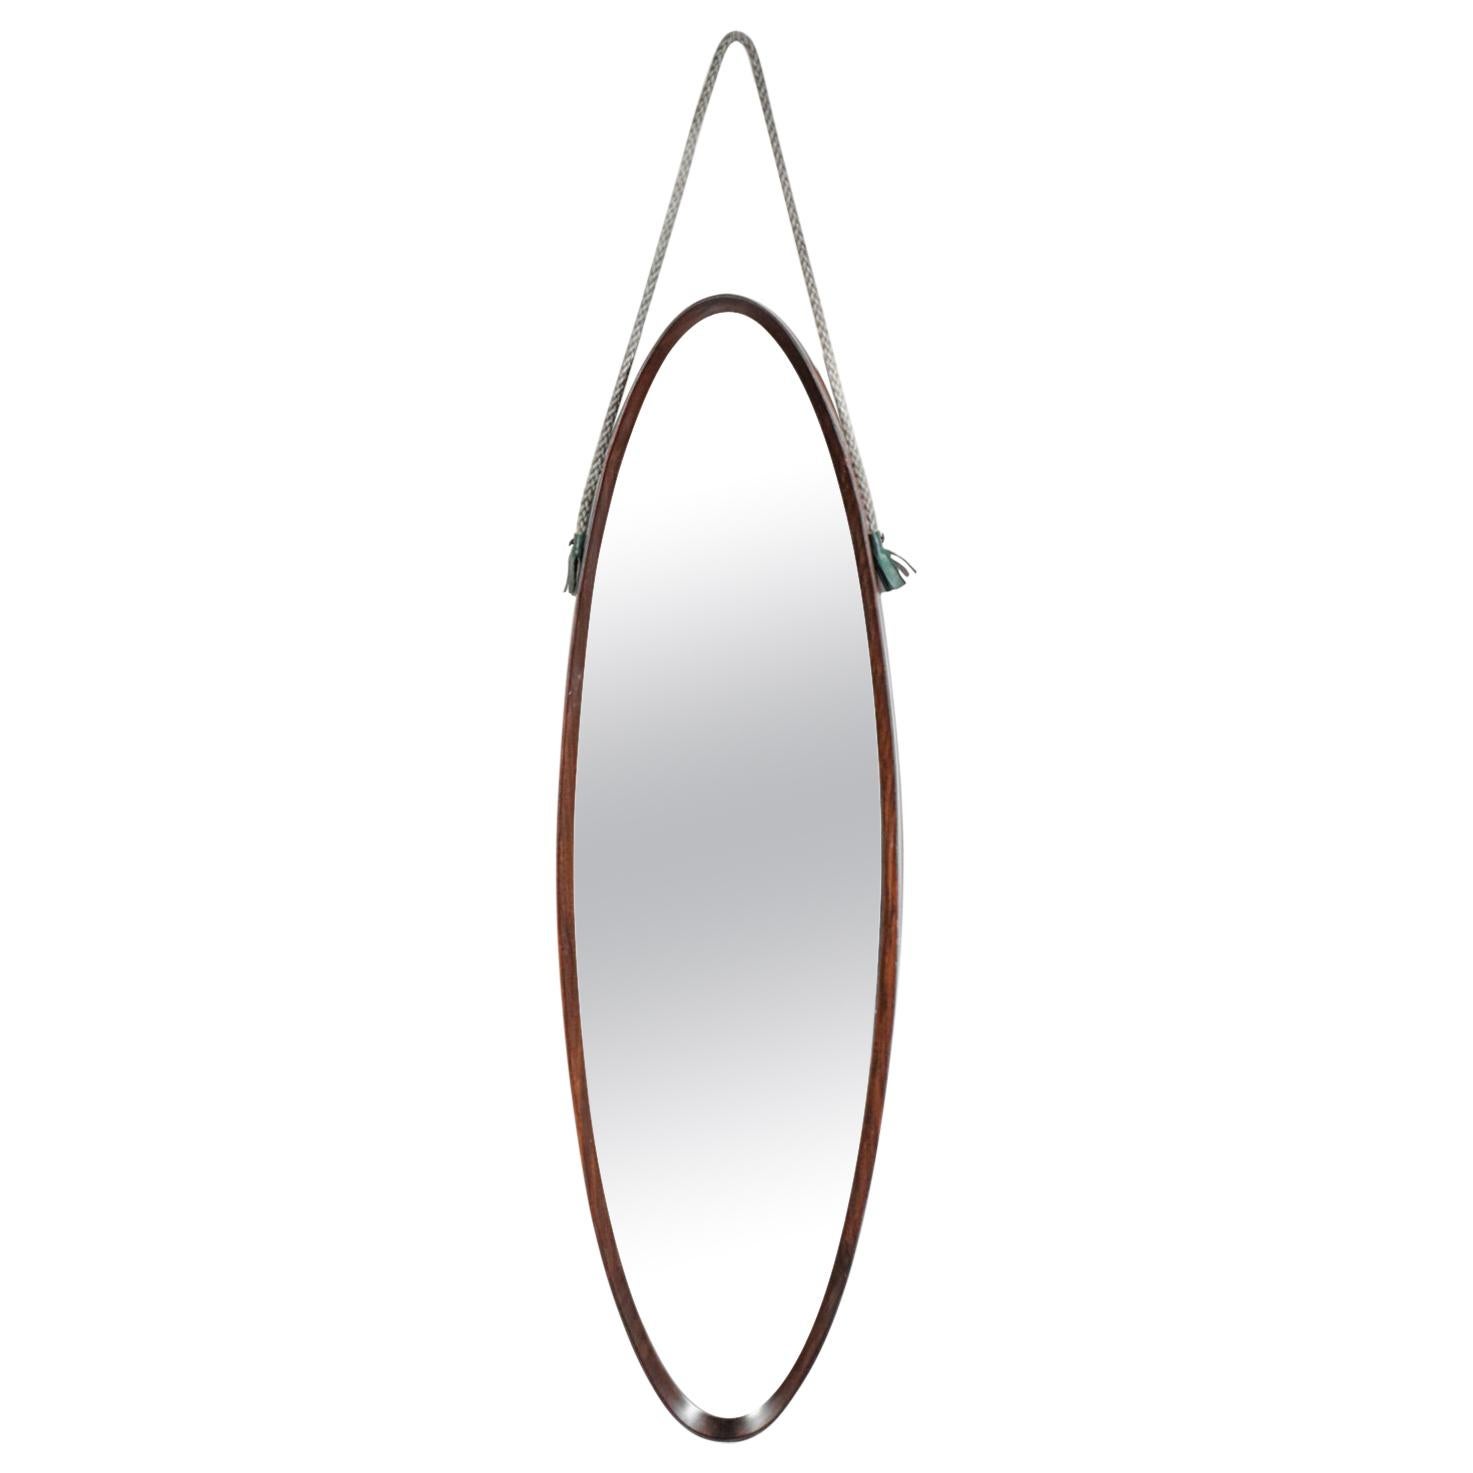 Italian Oval Mirror of the 60s in Teak Vintage Design in Style of Gio Ponti